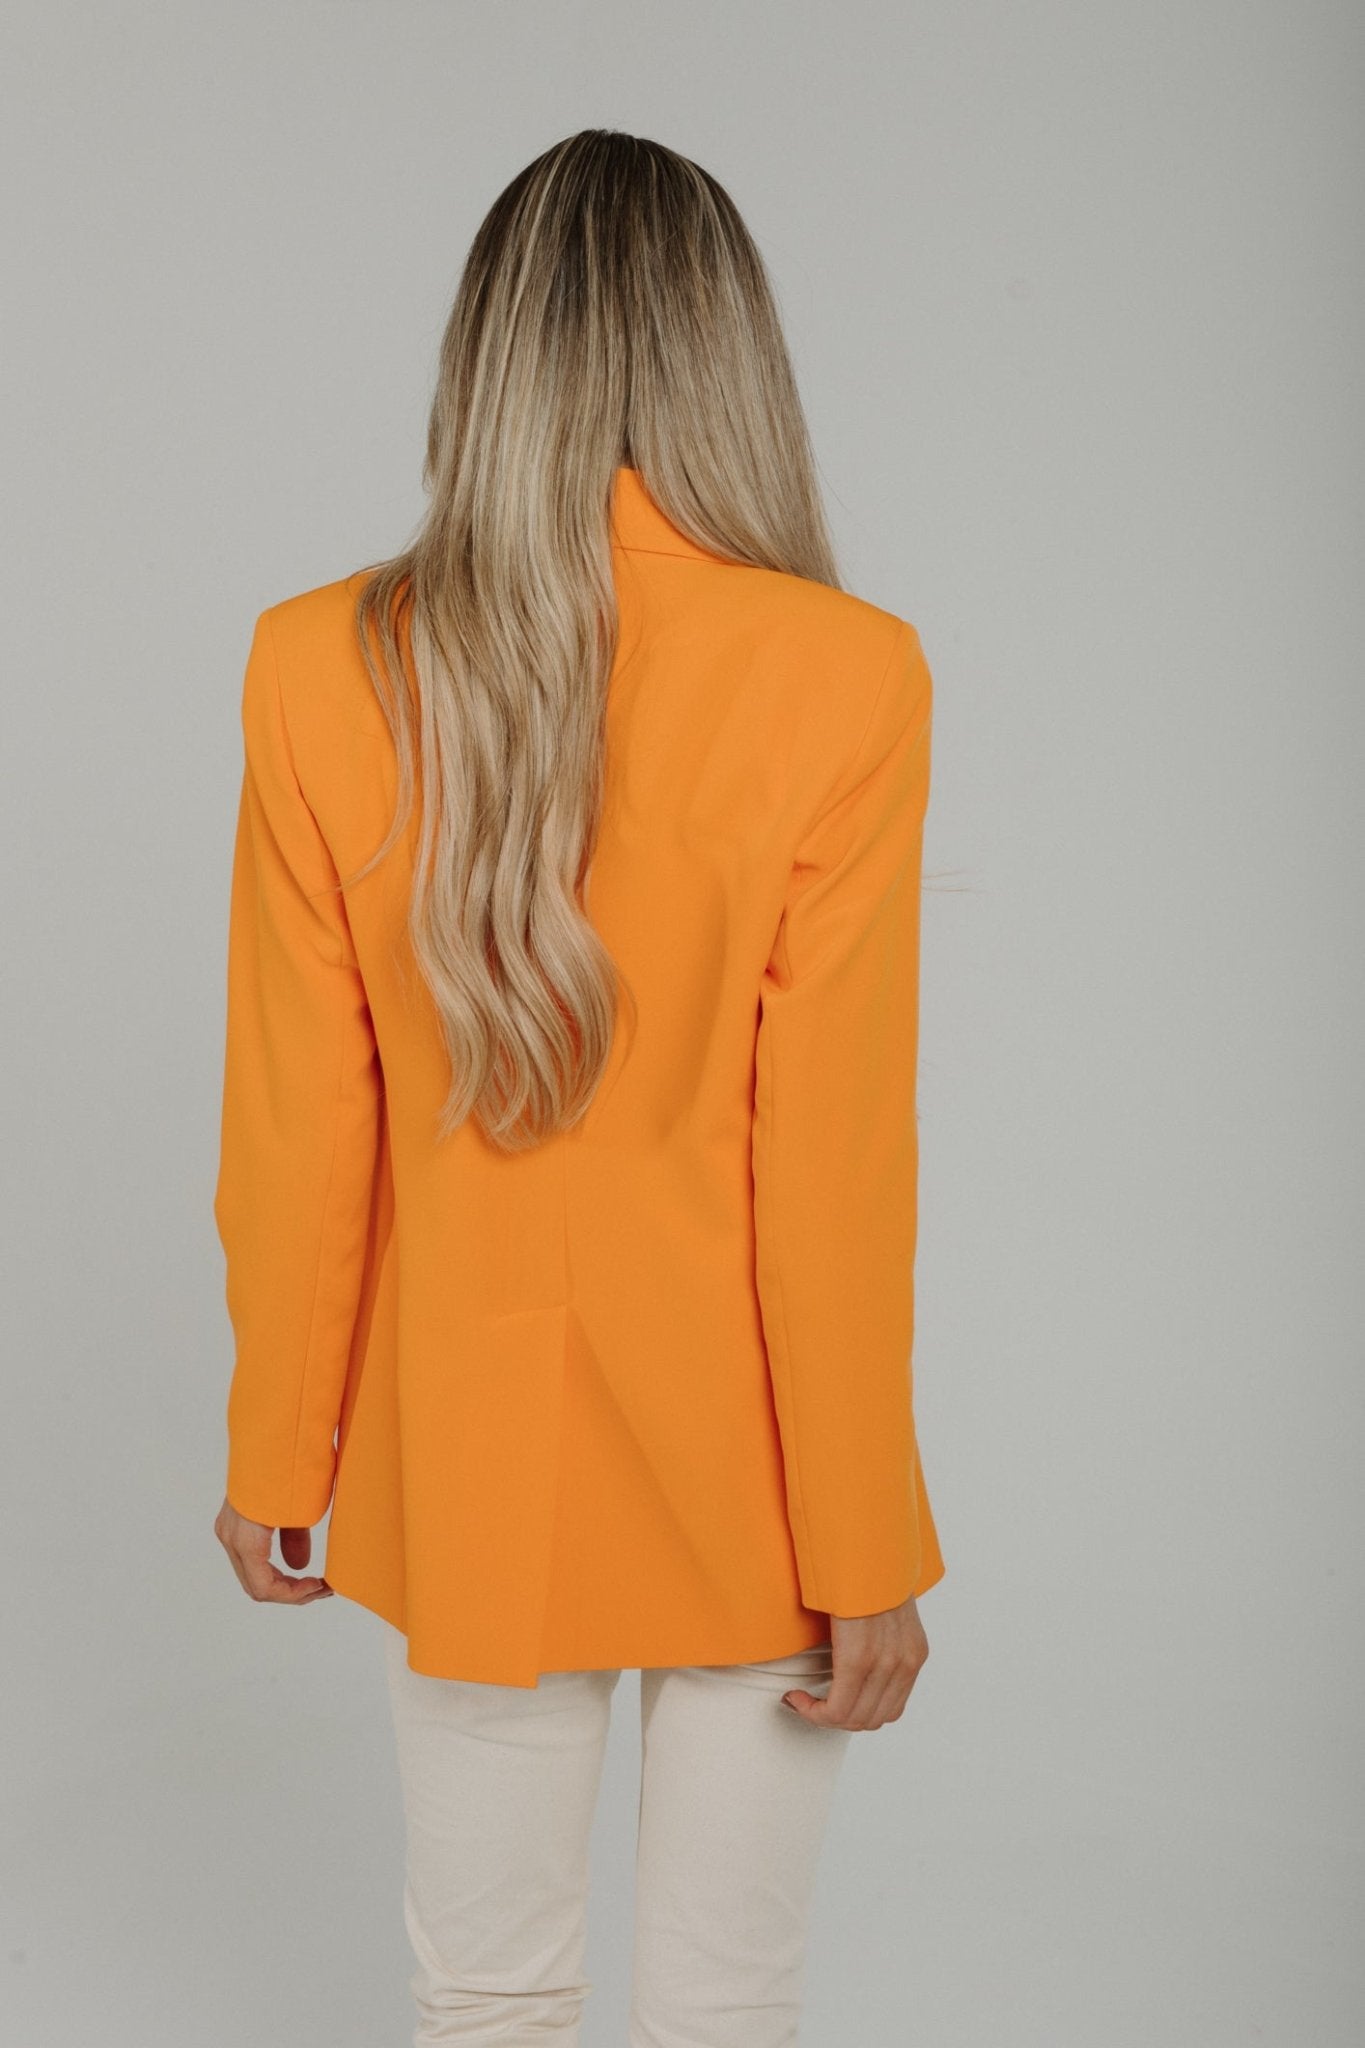 Alana Buckle Blazer In Orange - The Walk in Wardrobe